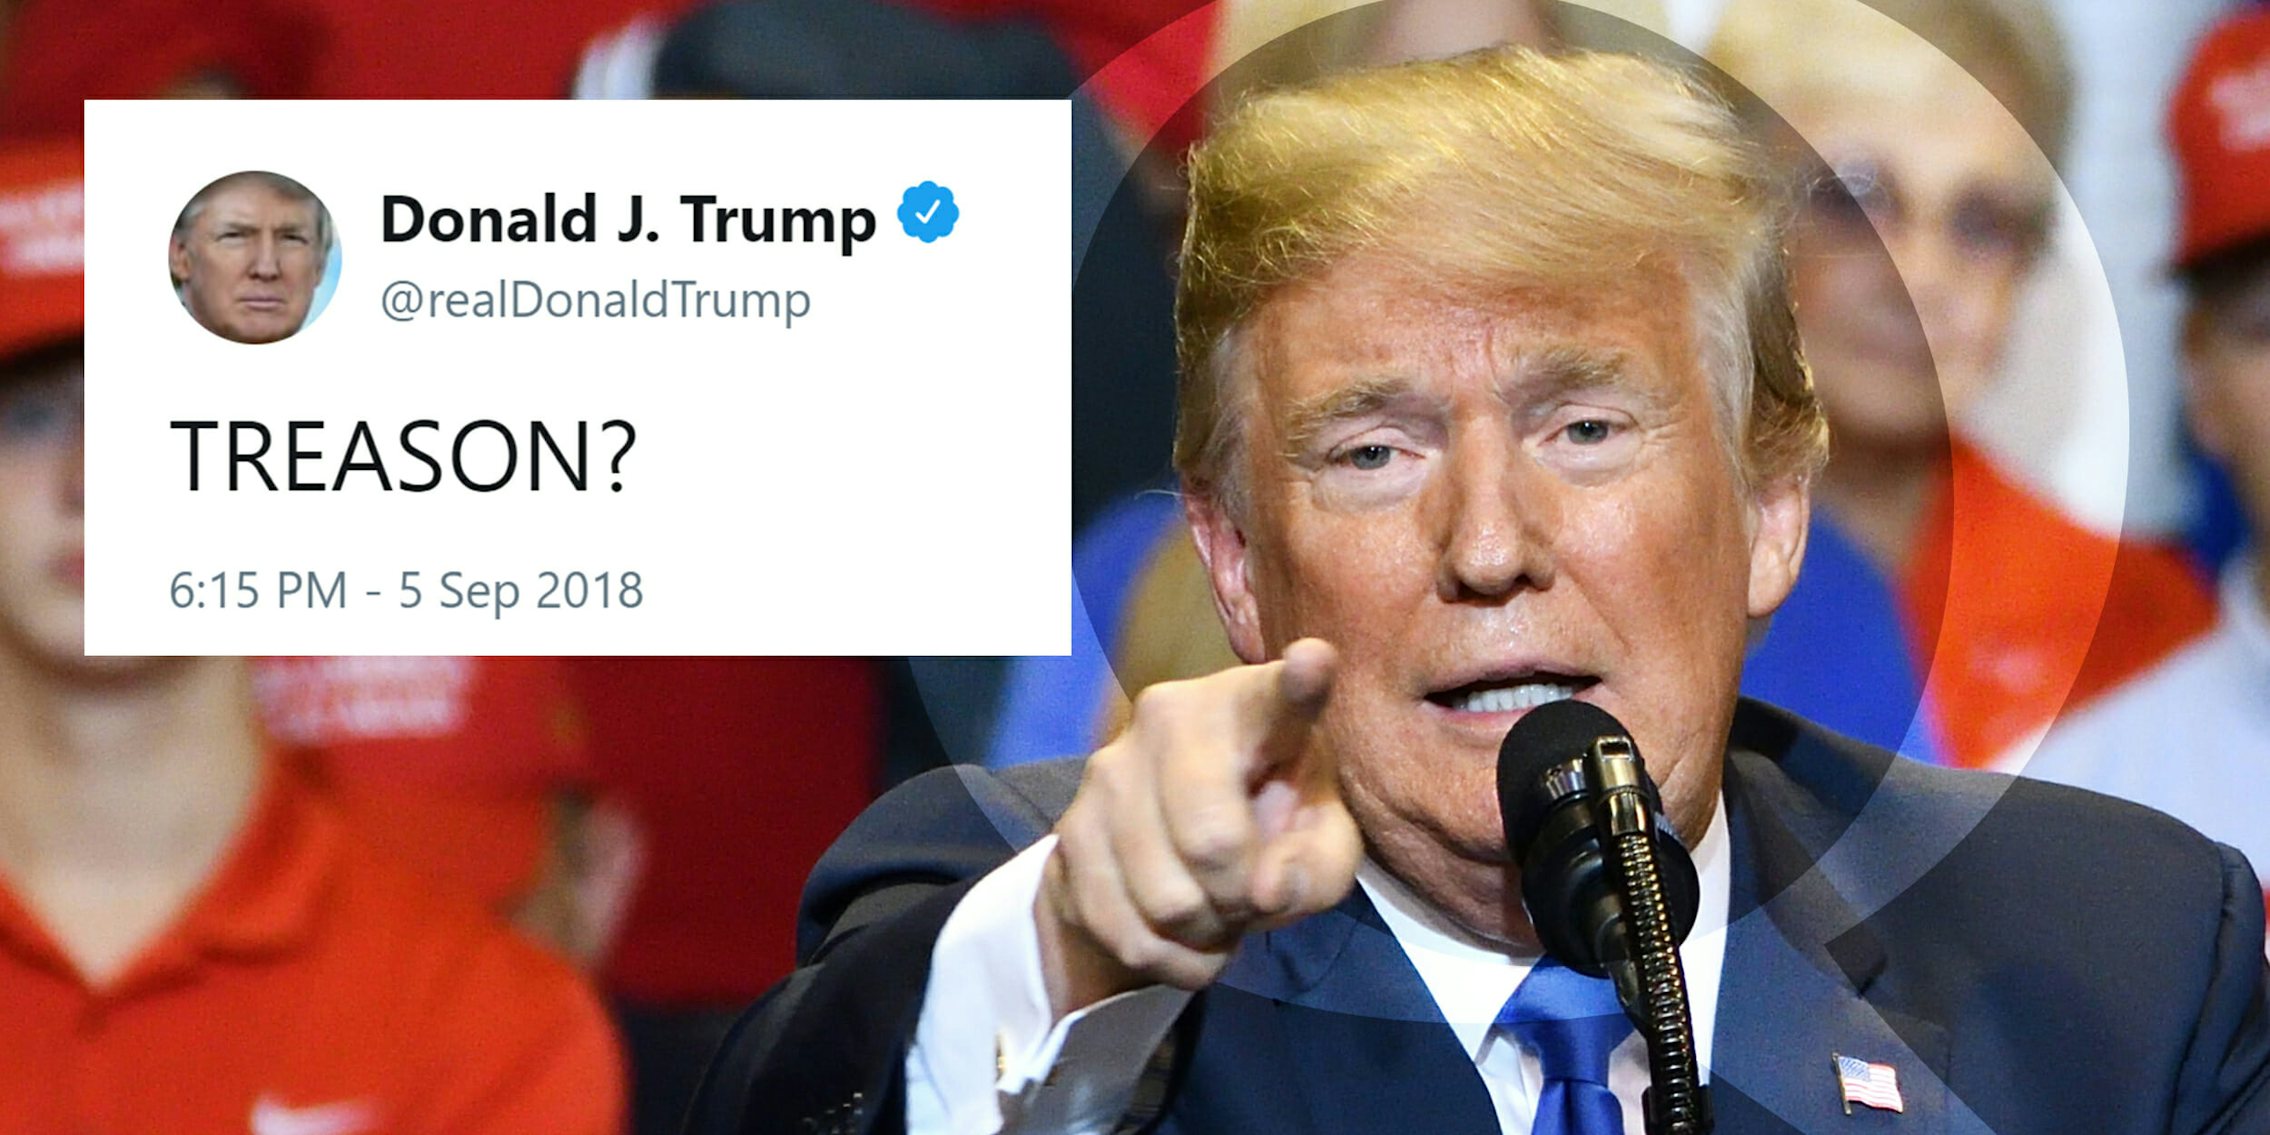 donald trump with 'treason?' tweet and Q superimposed